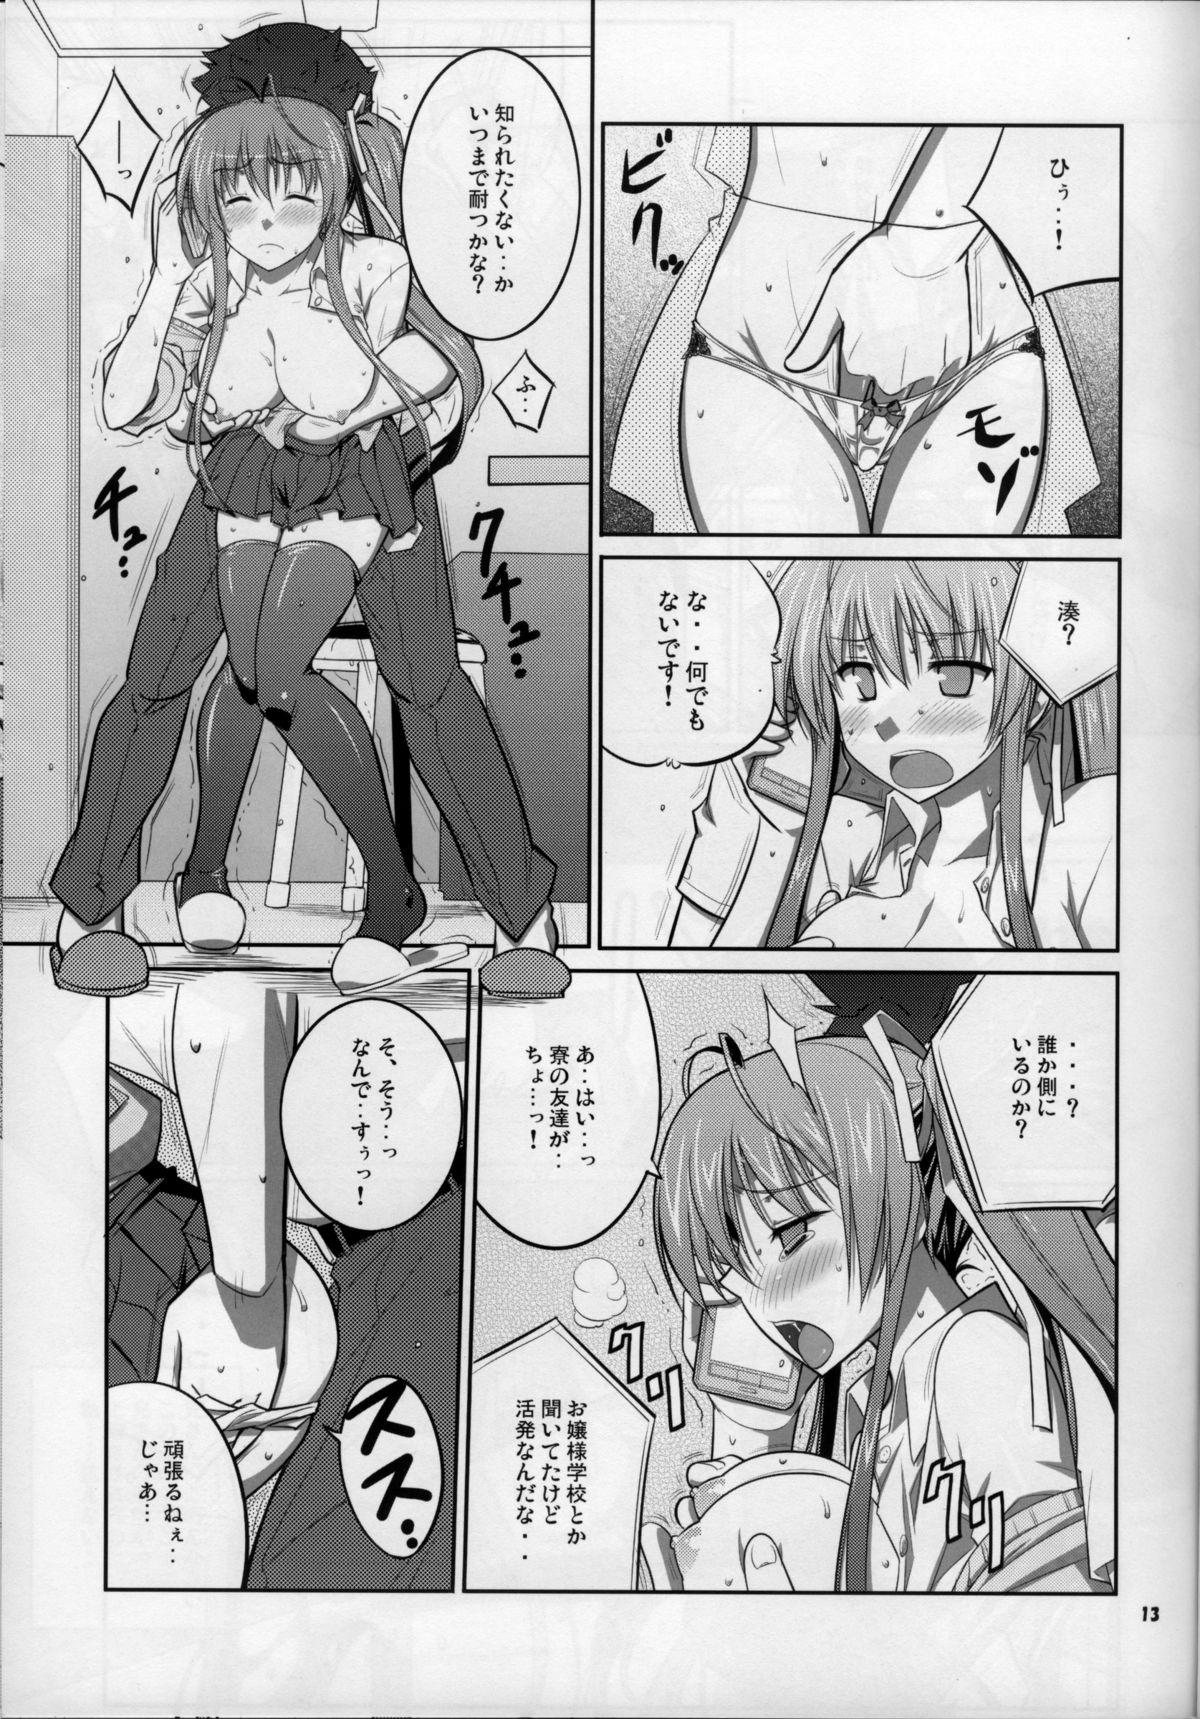 Story SHE BLOOMS AT NIGHT - Akaneiro ni somaru saka Novinhas - Page 13